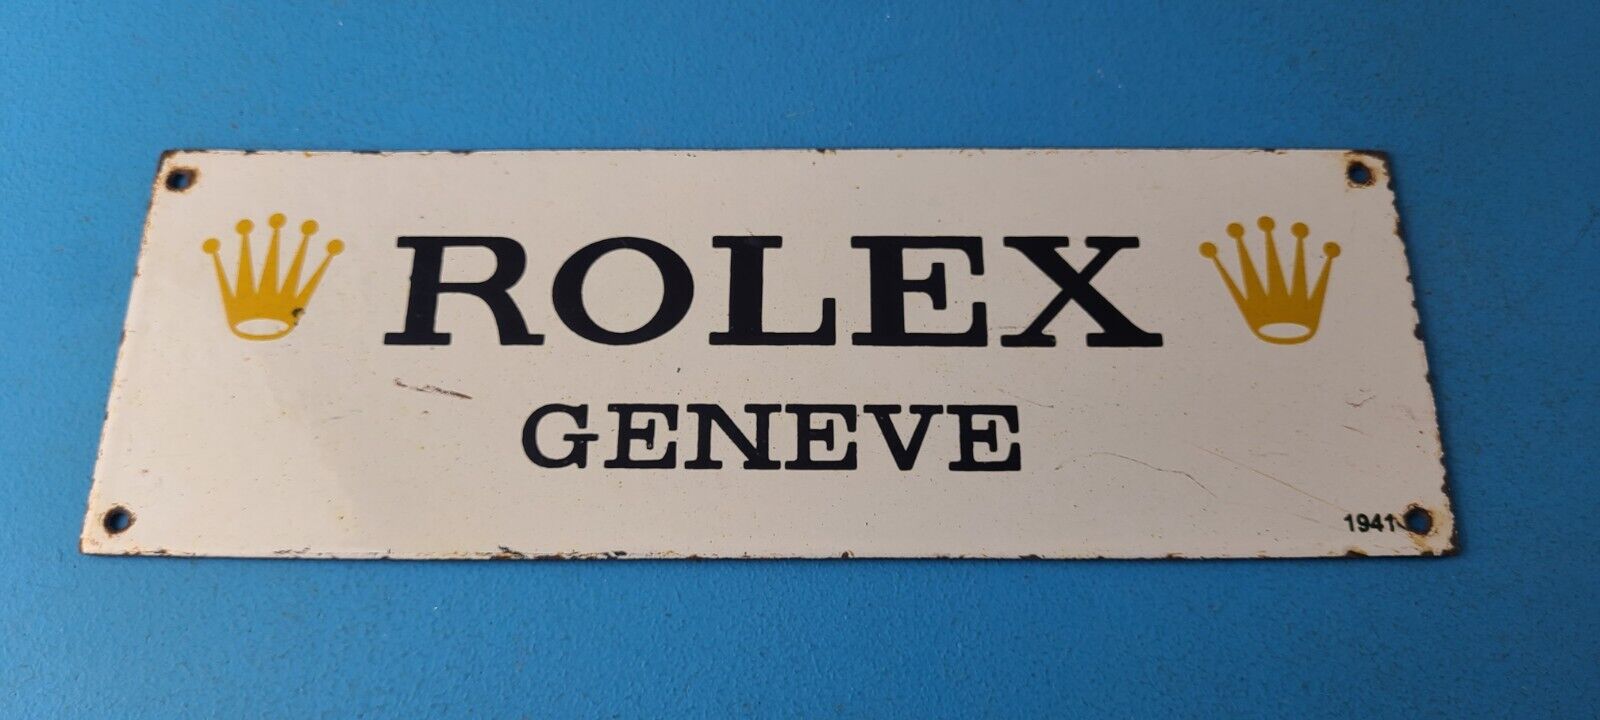 Vintage Rolex Luxury Watches Porcelain Sign - Geneve General Store Gas Pump Sign